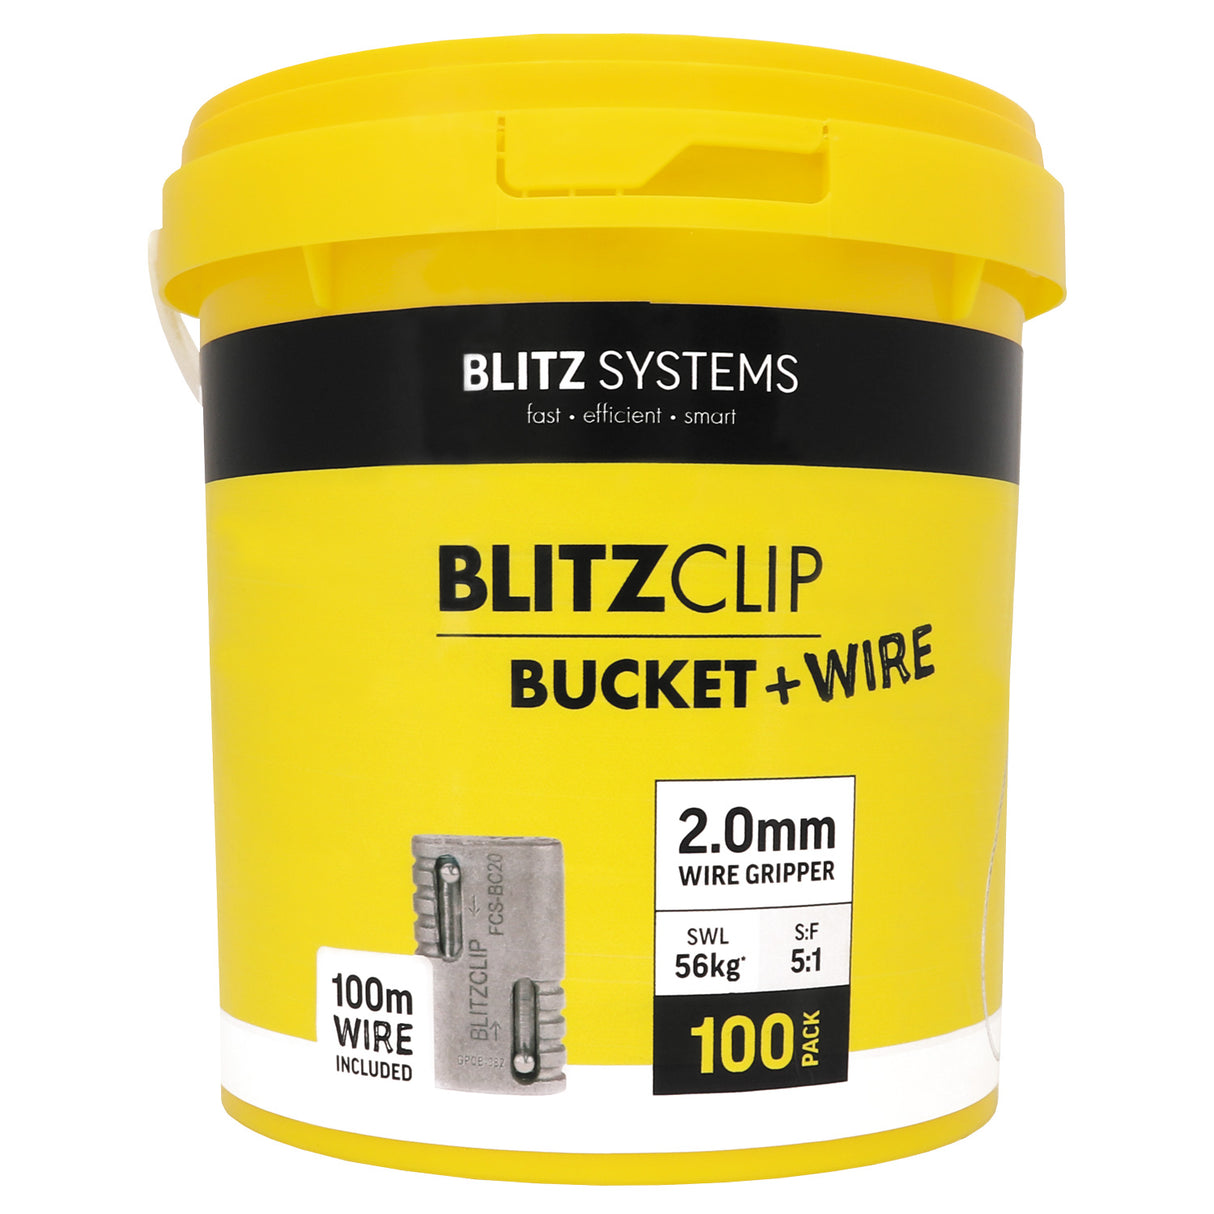 BLITZCLIP Bucket - 2.0mm Wire Gripper x 100 Pcs + Wire 2.0x100M